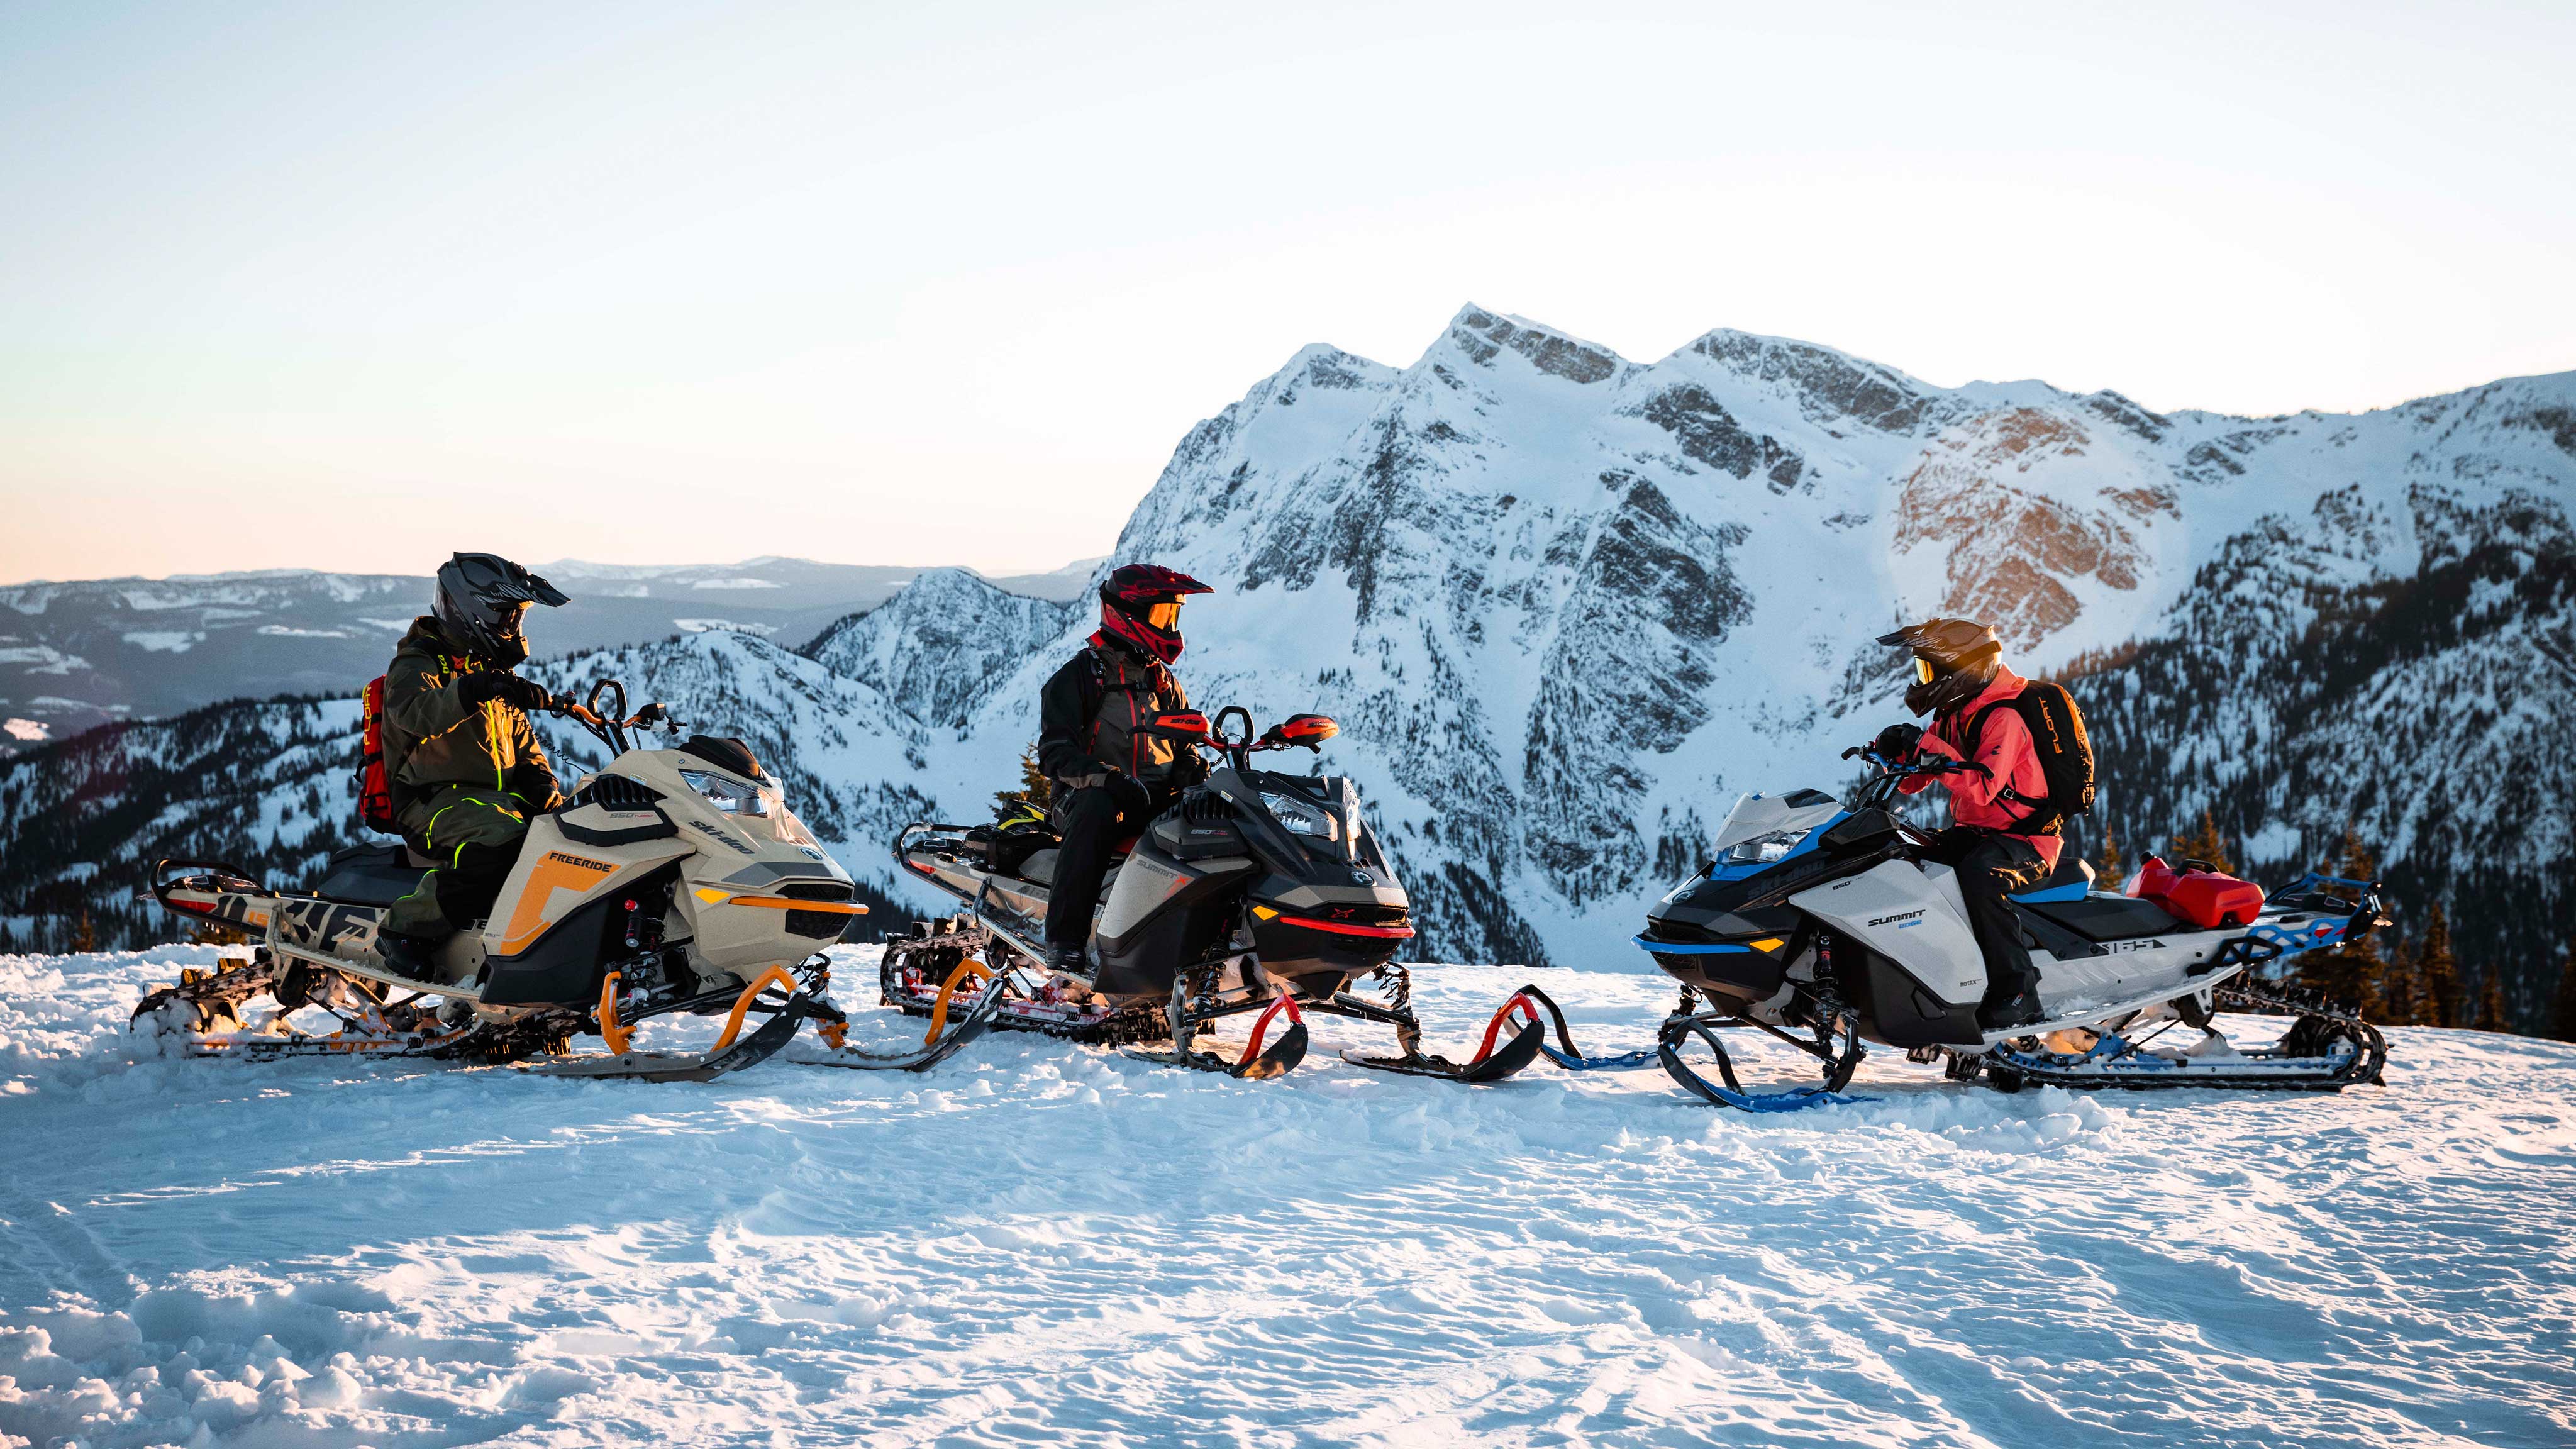 Men with Ski-Doo 2020 sleds